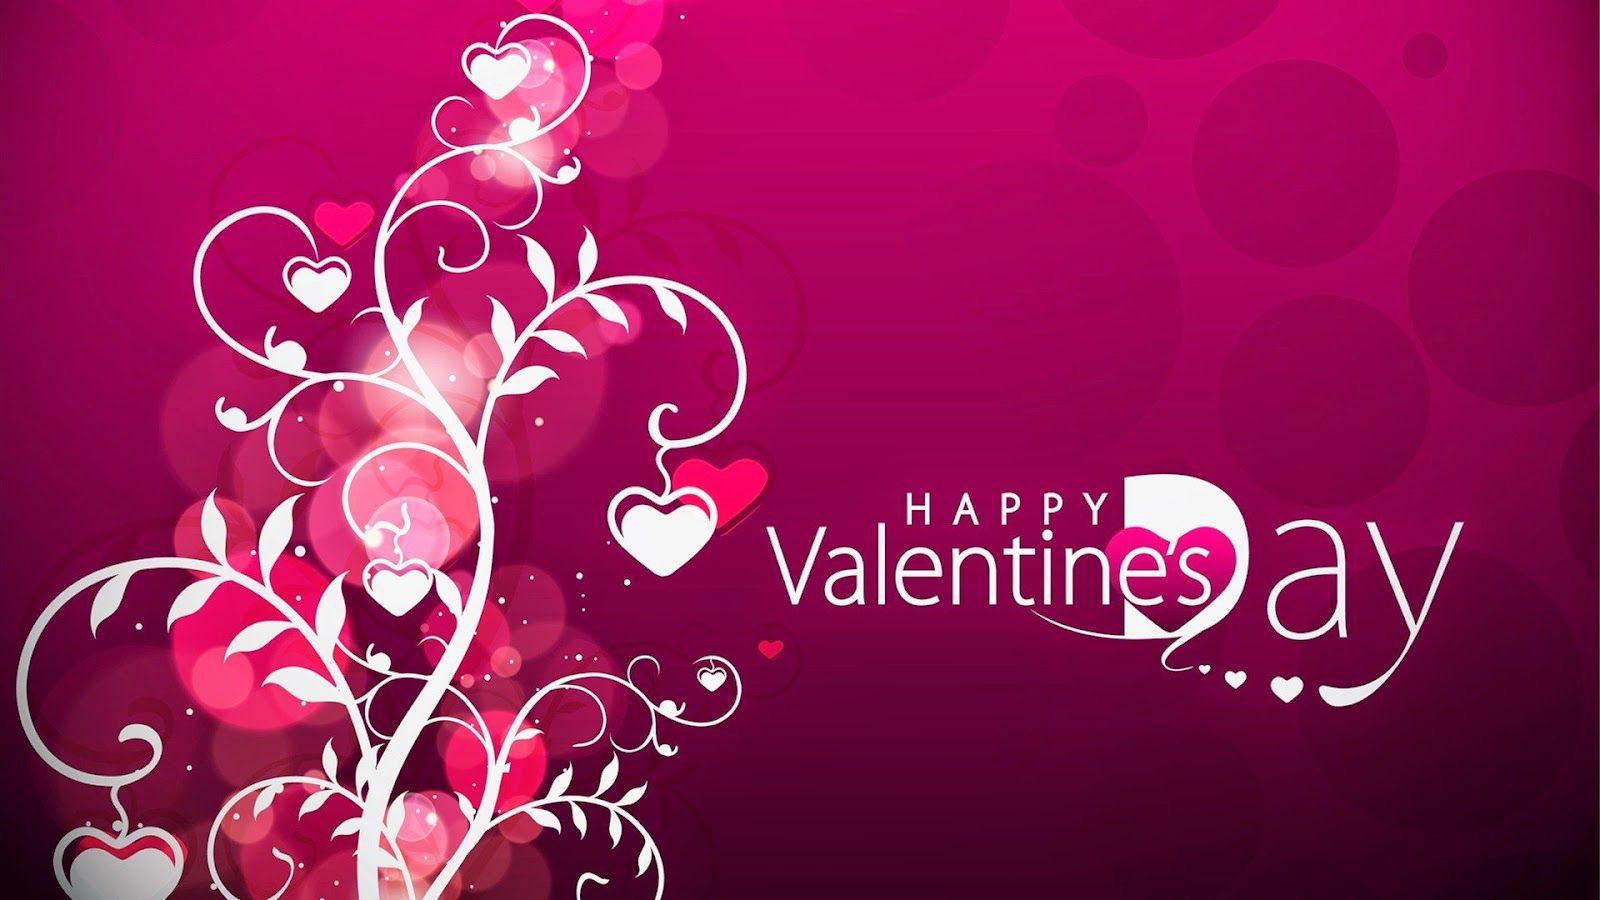 New Valentine's Day Desktop Wallpaper for 2015. Happy